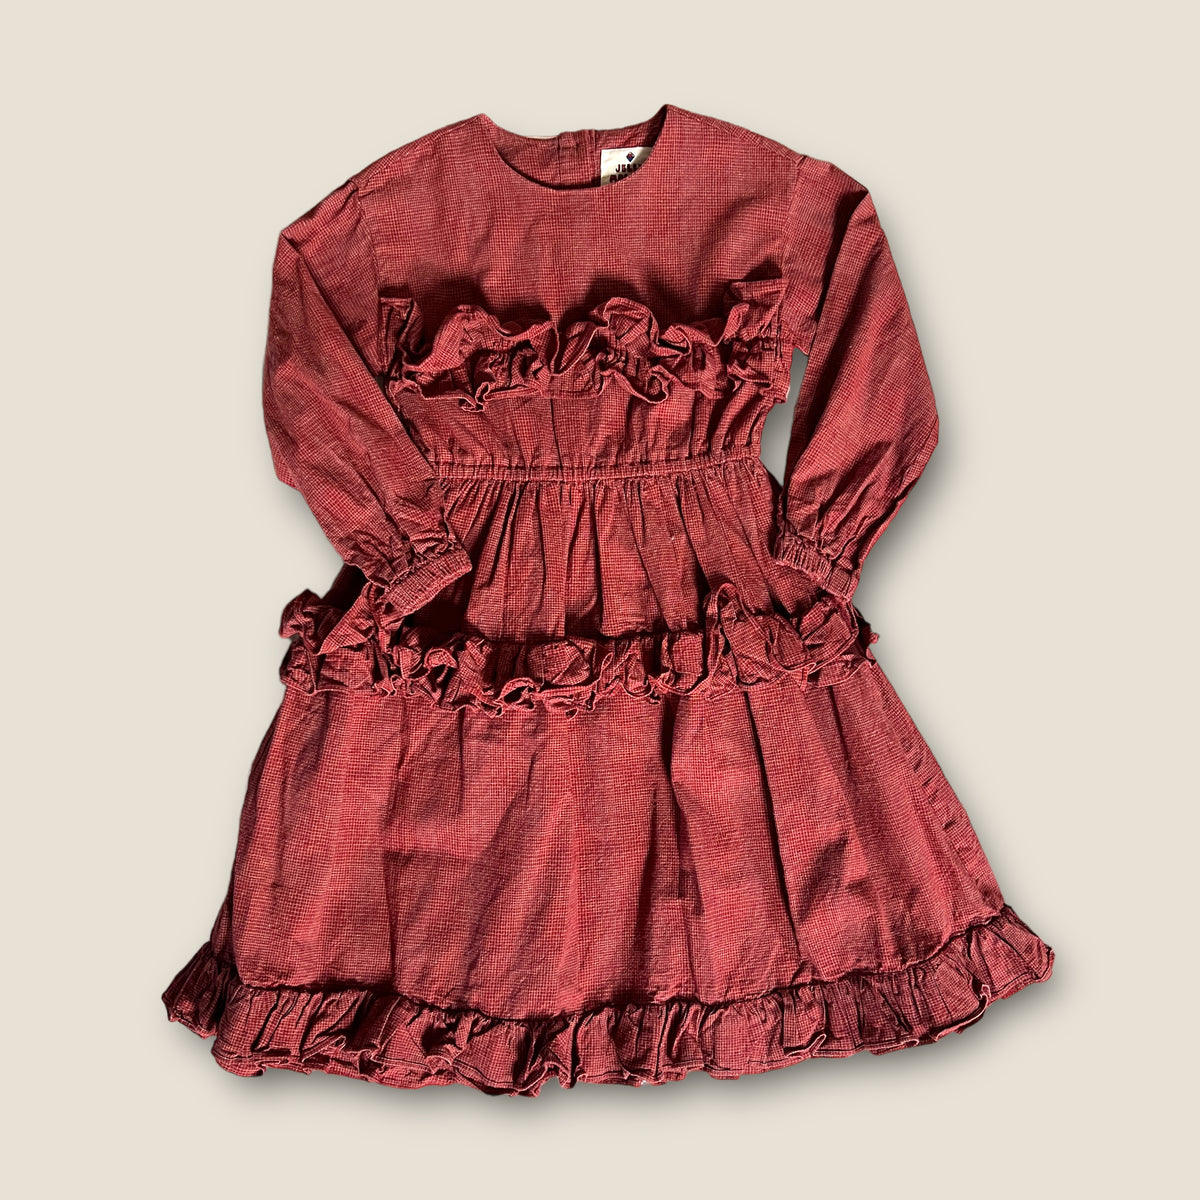 Jelly Mallow Dress size 6-7 years